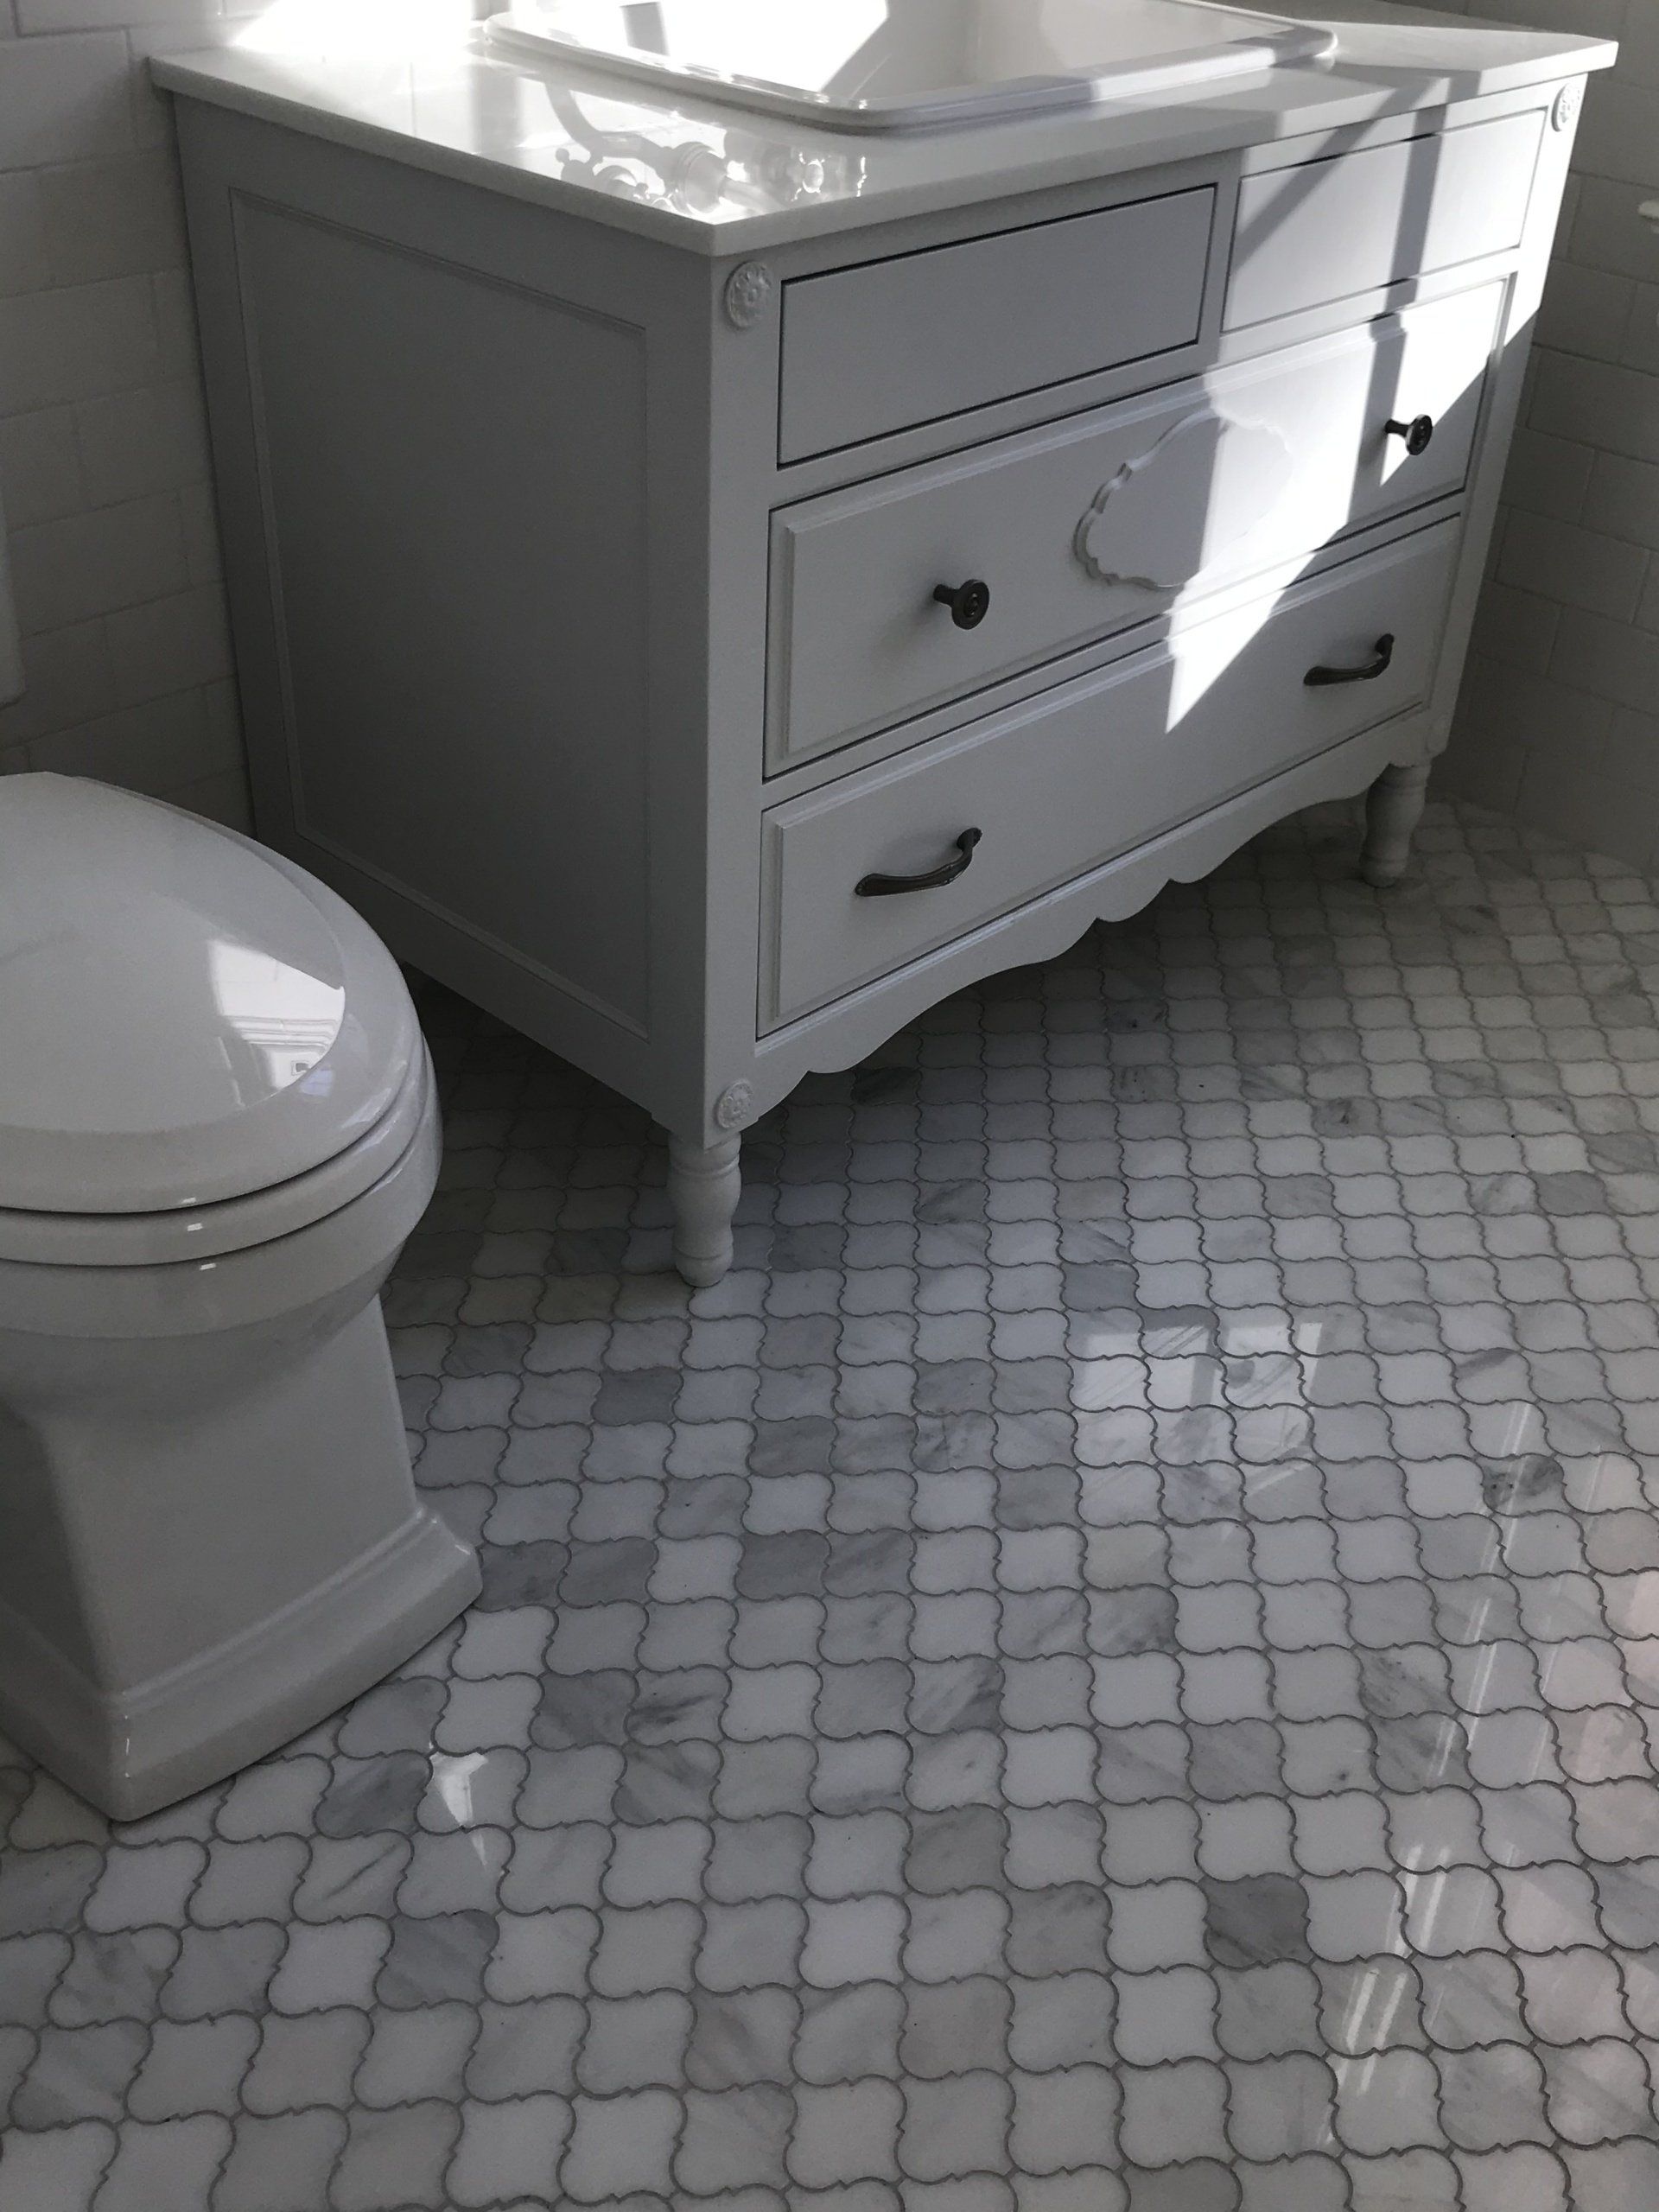 Bathroom Installation | Woodbury, Syosset, Melville, NY | Portico Tile